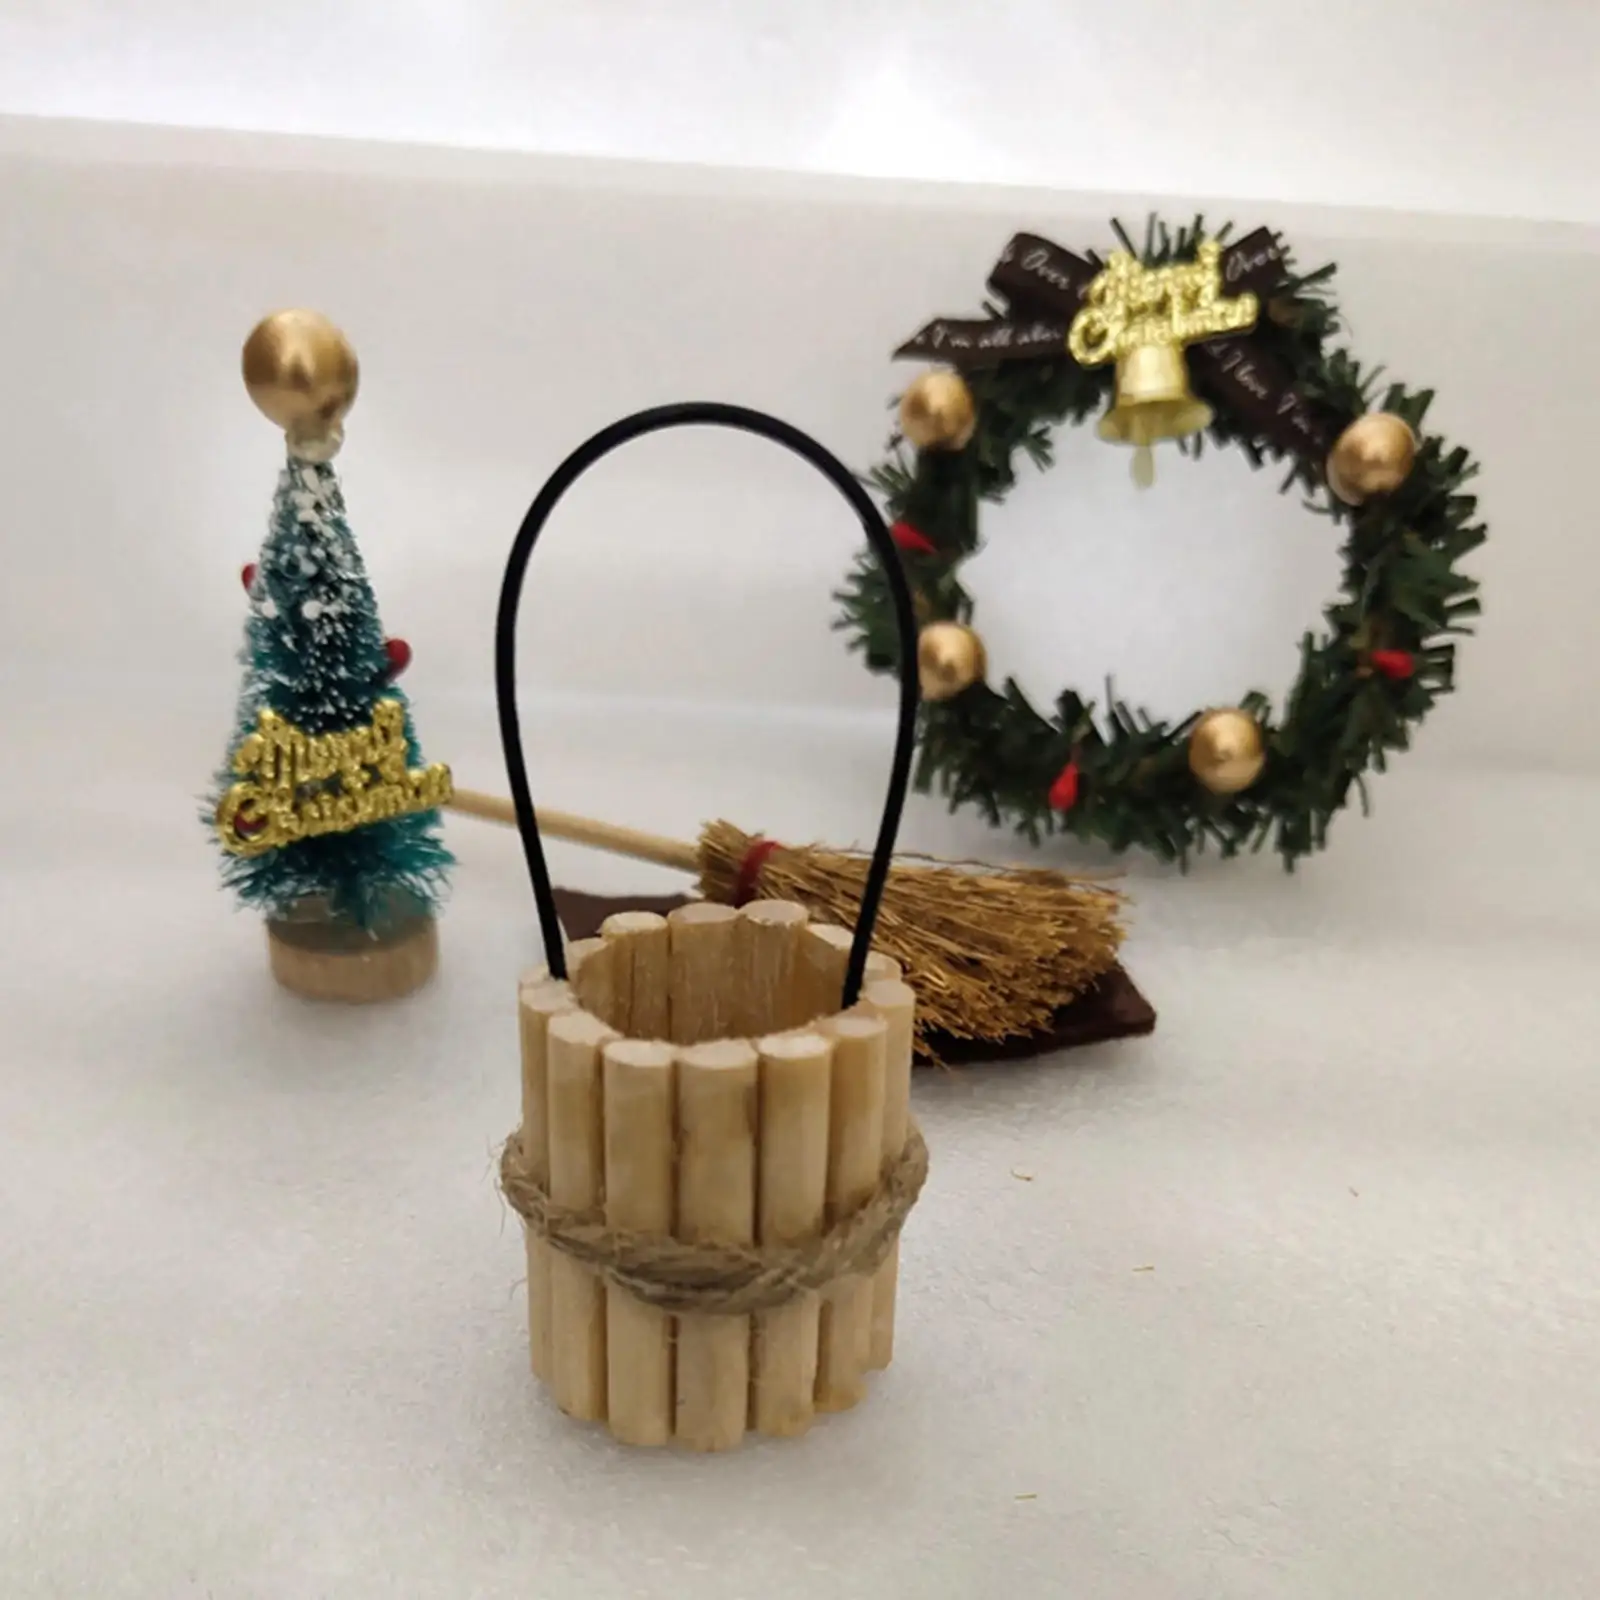 Miniature Dollhouse Accessories, Christmas Wreath, Miniature Dolls House Ornaments for Mini Broom, Bucket, Rugs